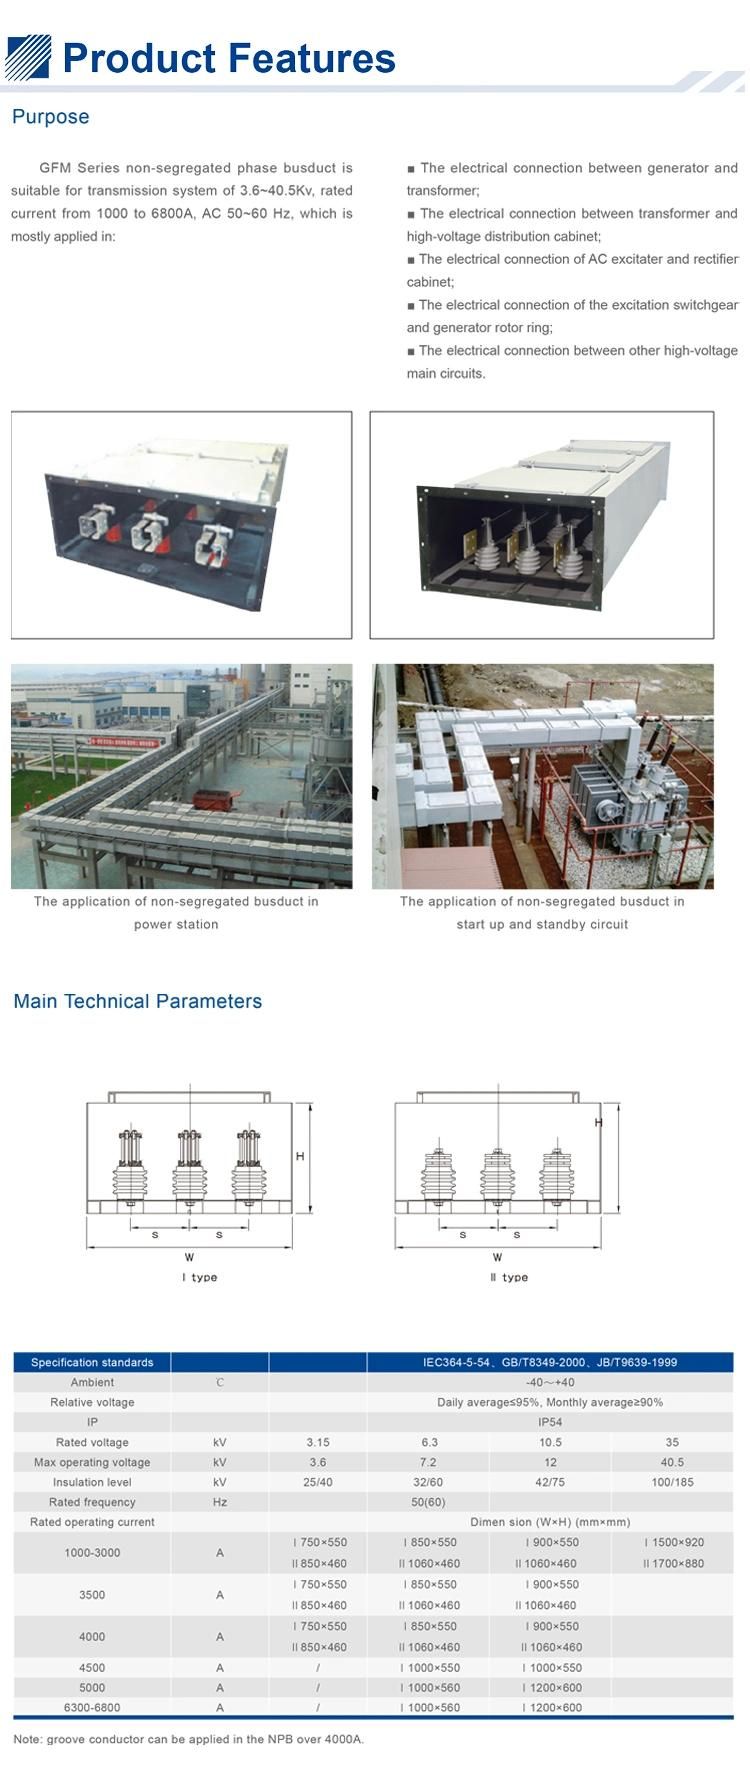 Gfm Non-Segregated Busway Factory Branch Circuits Power Plant Power Transmission